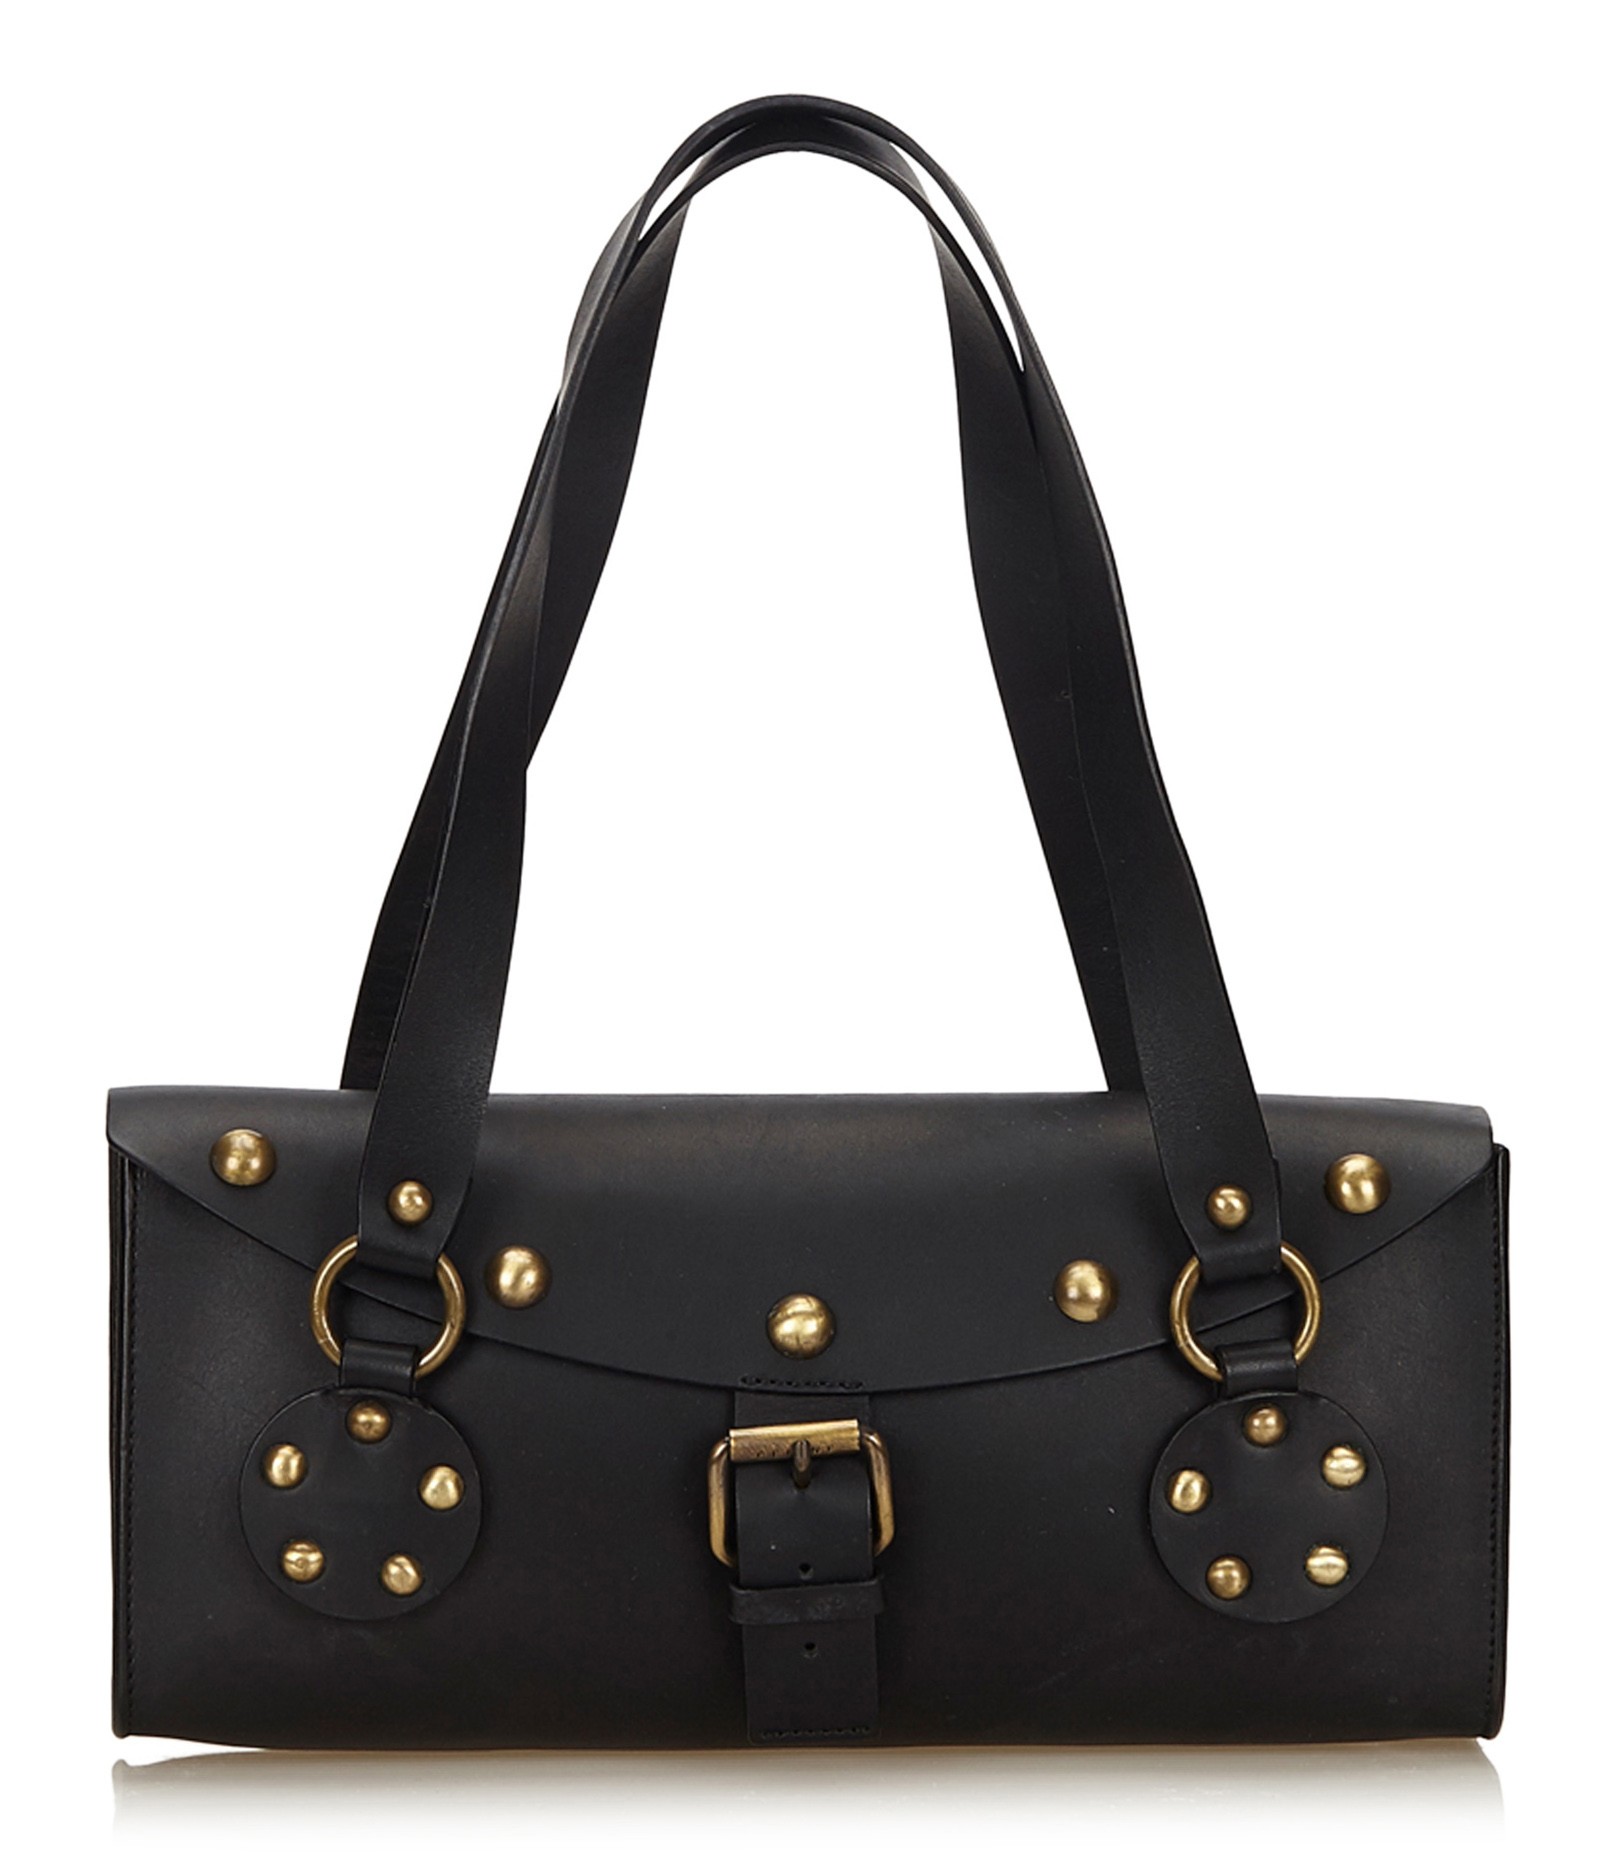 Black studded clutch purse